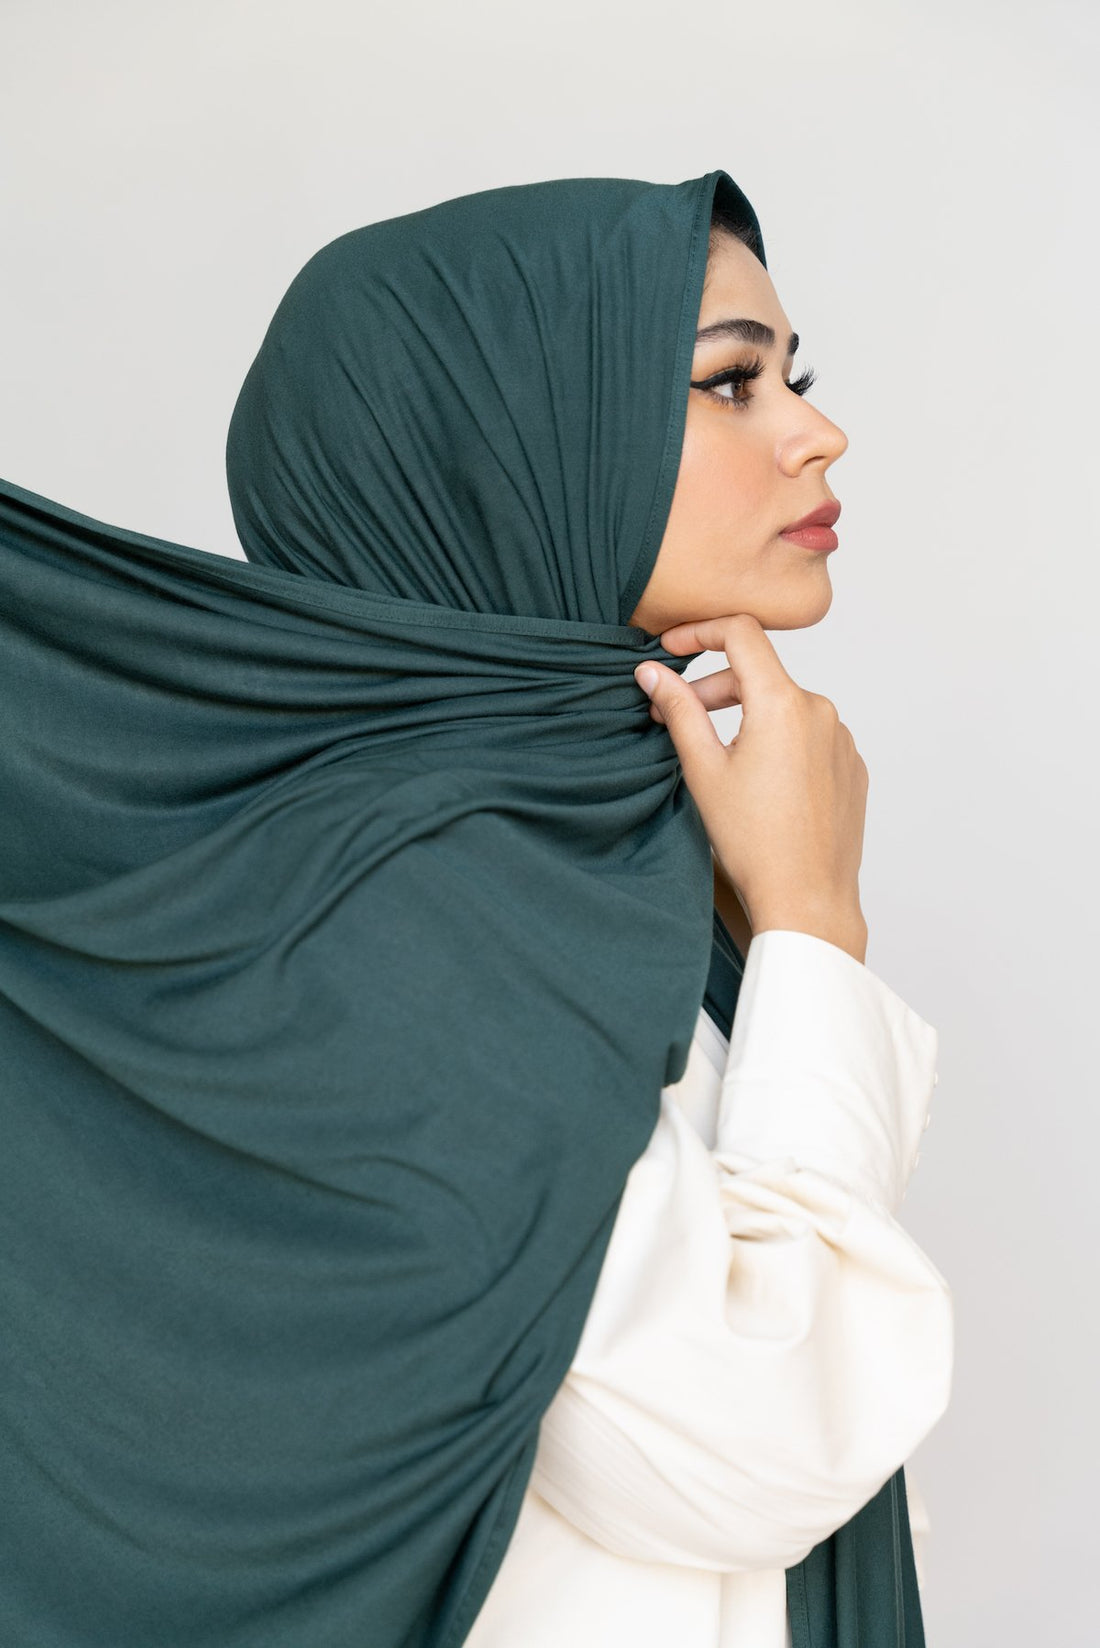 BAVARIAN FOREST Premium Jersey-AllScarves-Niswa Fashion